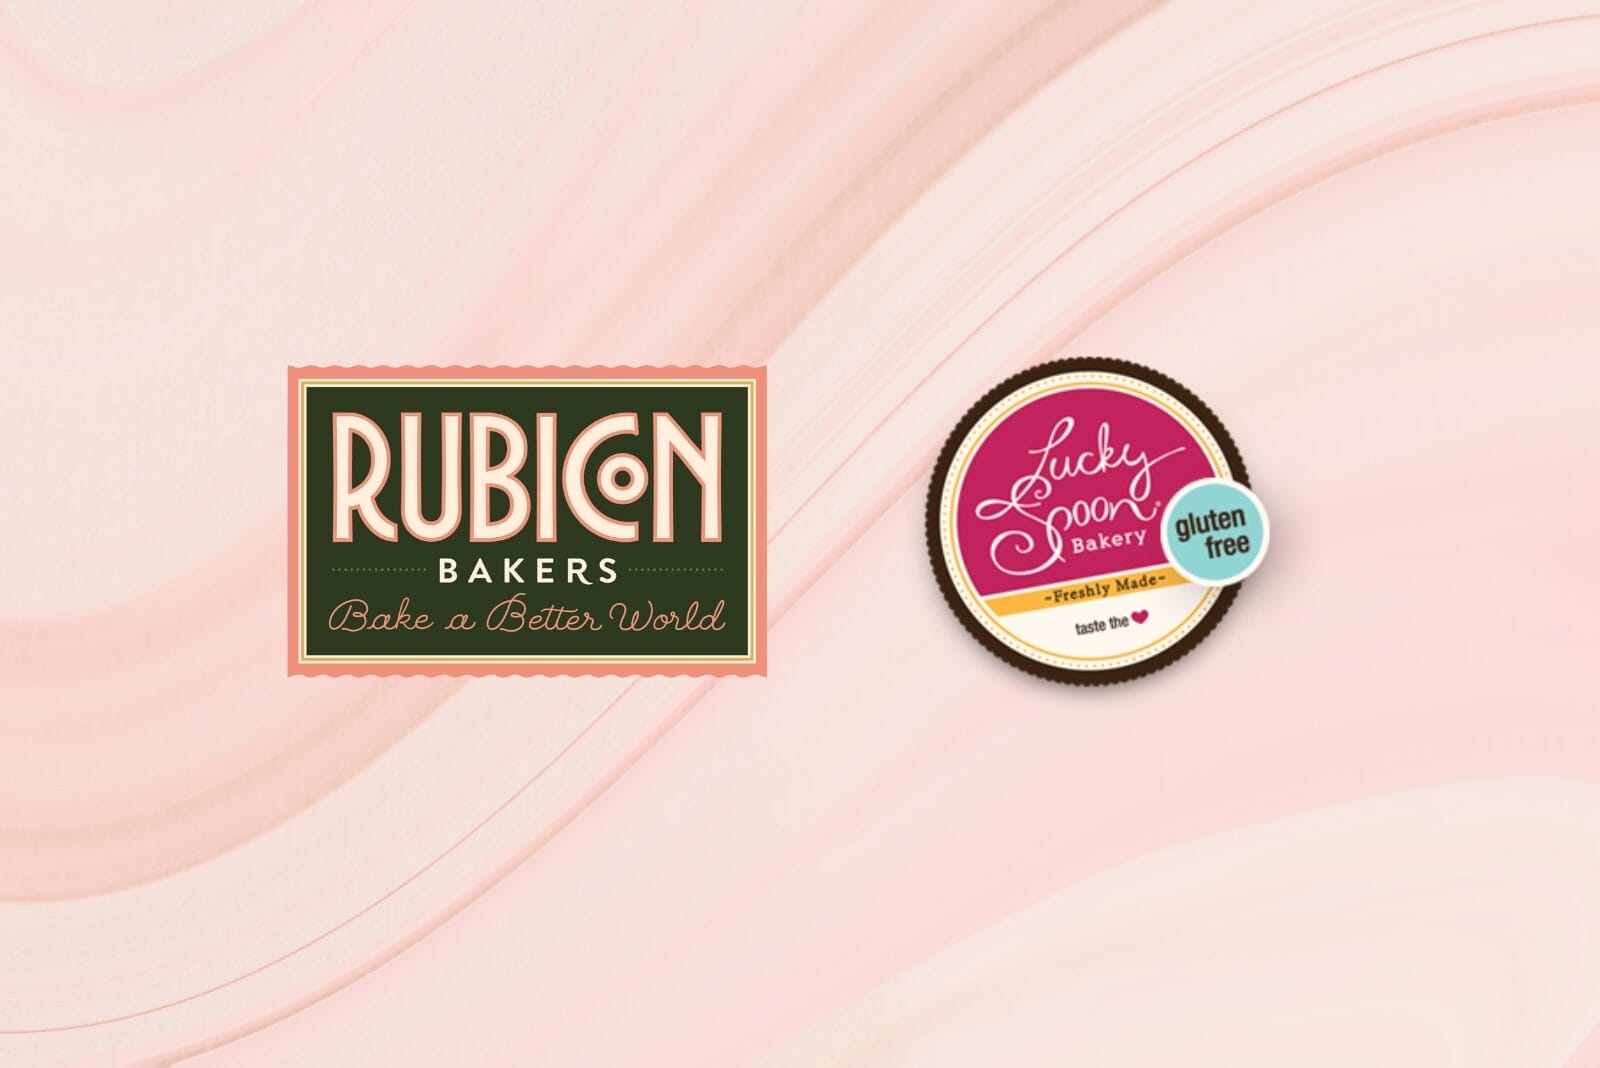 Rubicon Bakers and Lucky Spoon Bakery logos